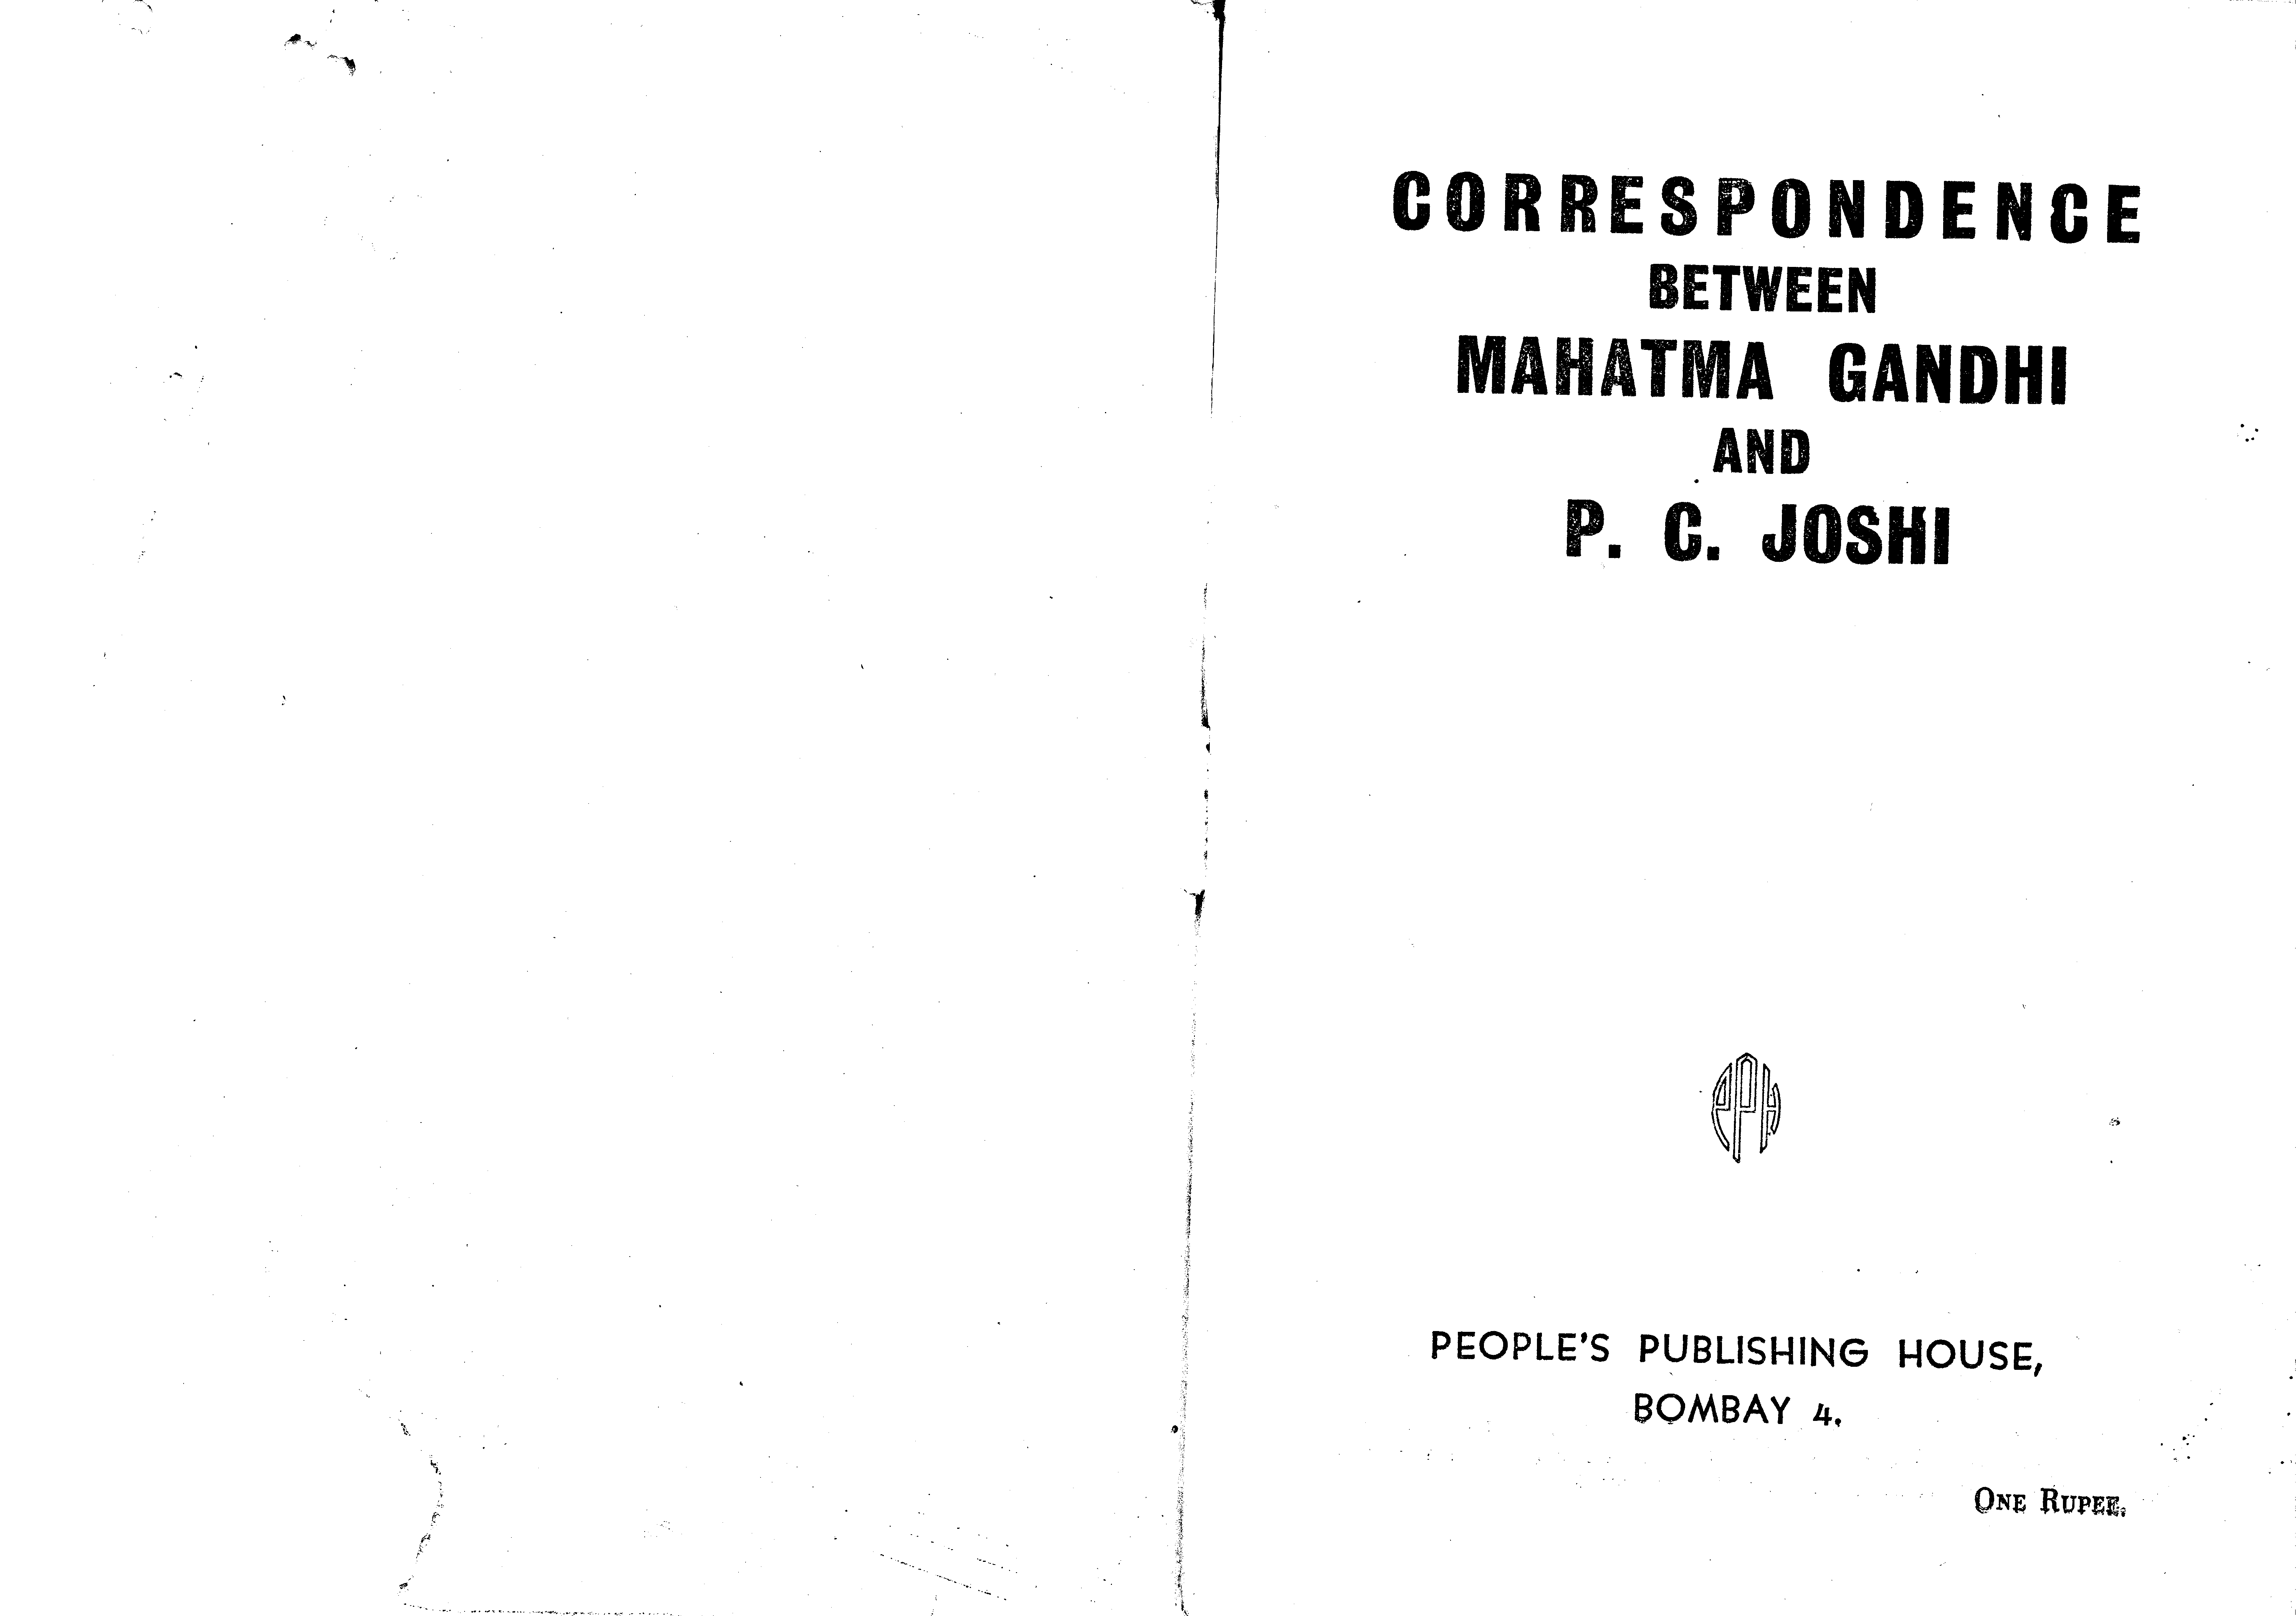 Correspondence between Gandhi - Joshi